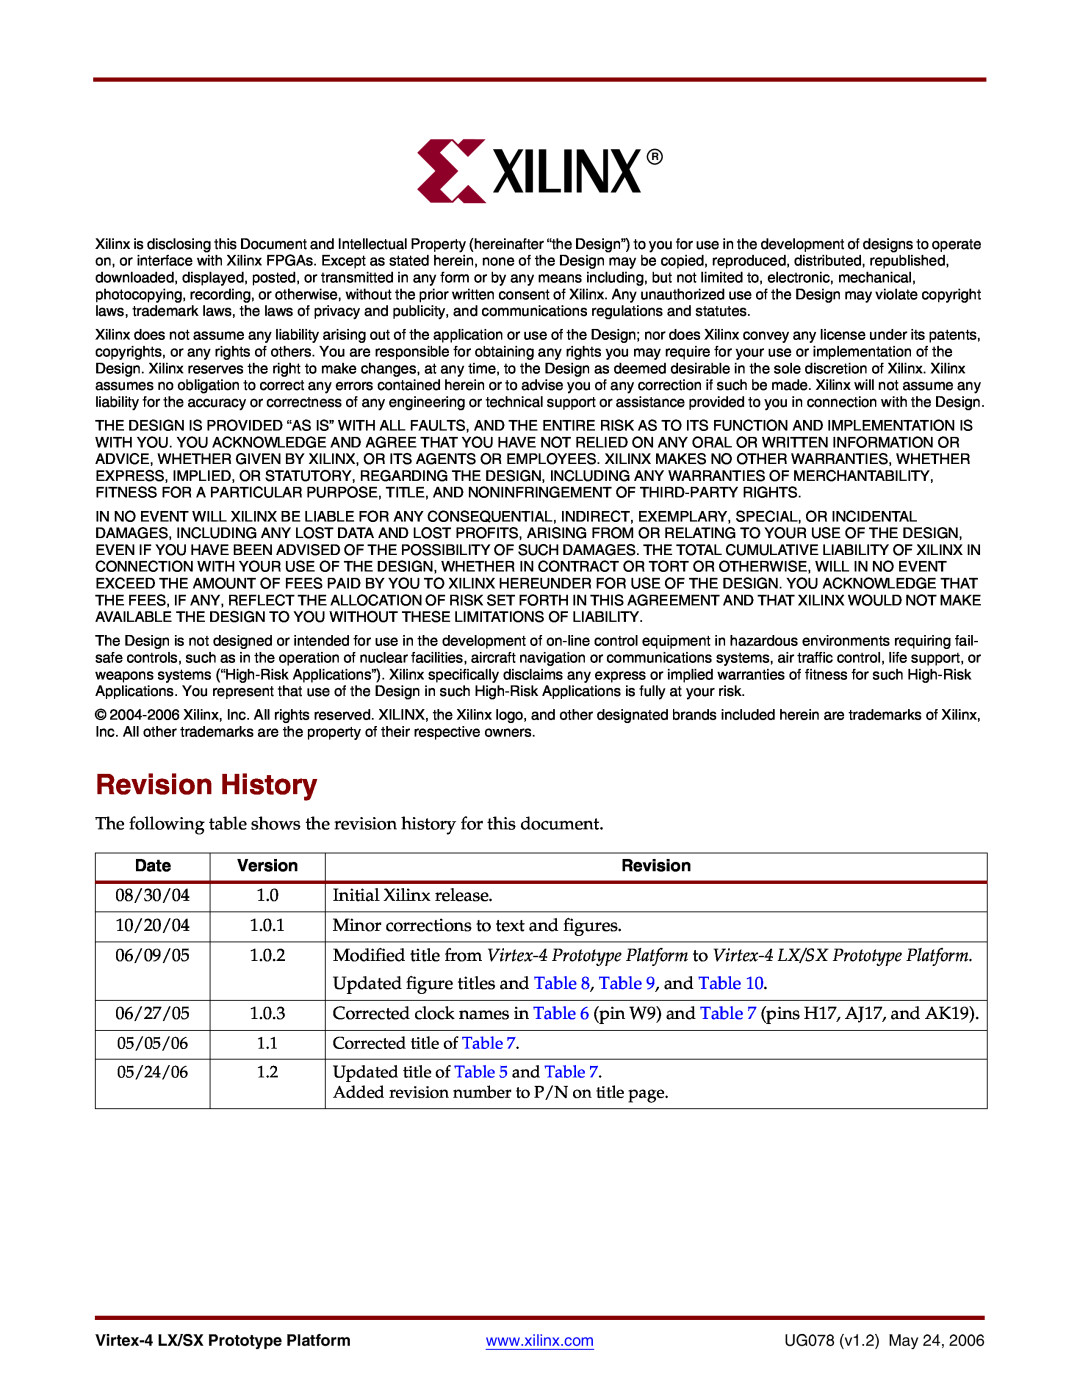 Xilinx UG078 manual Revision History, Date, Version 